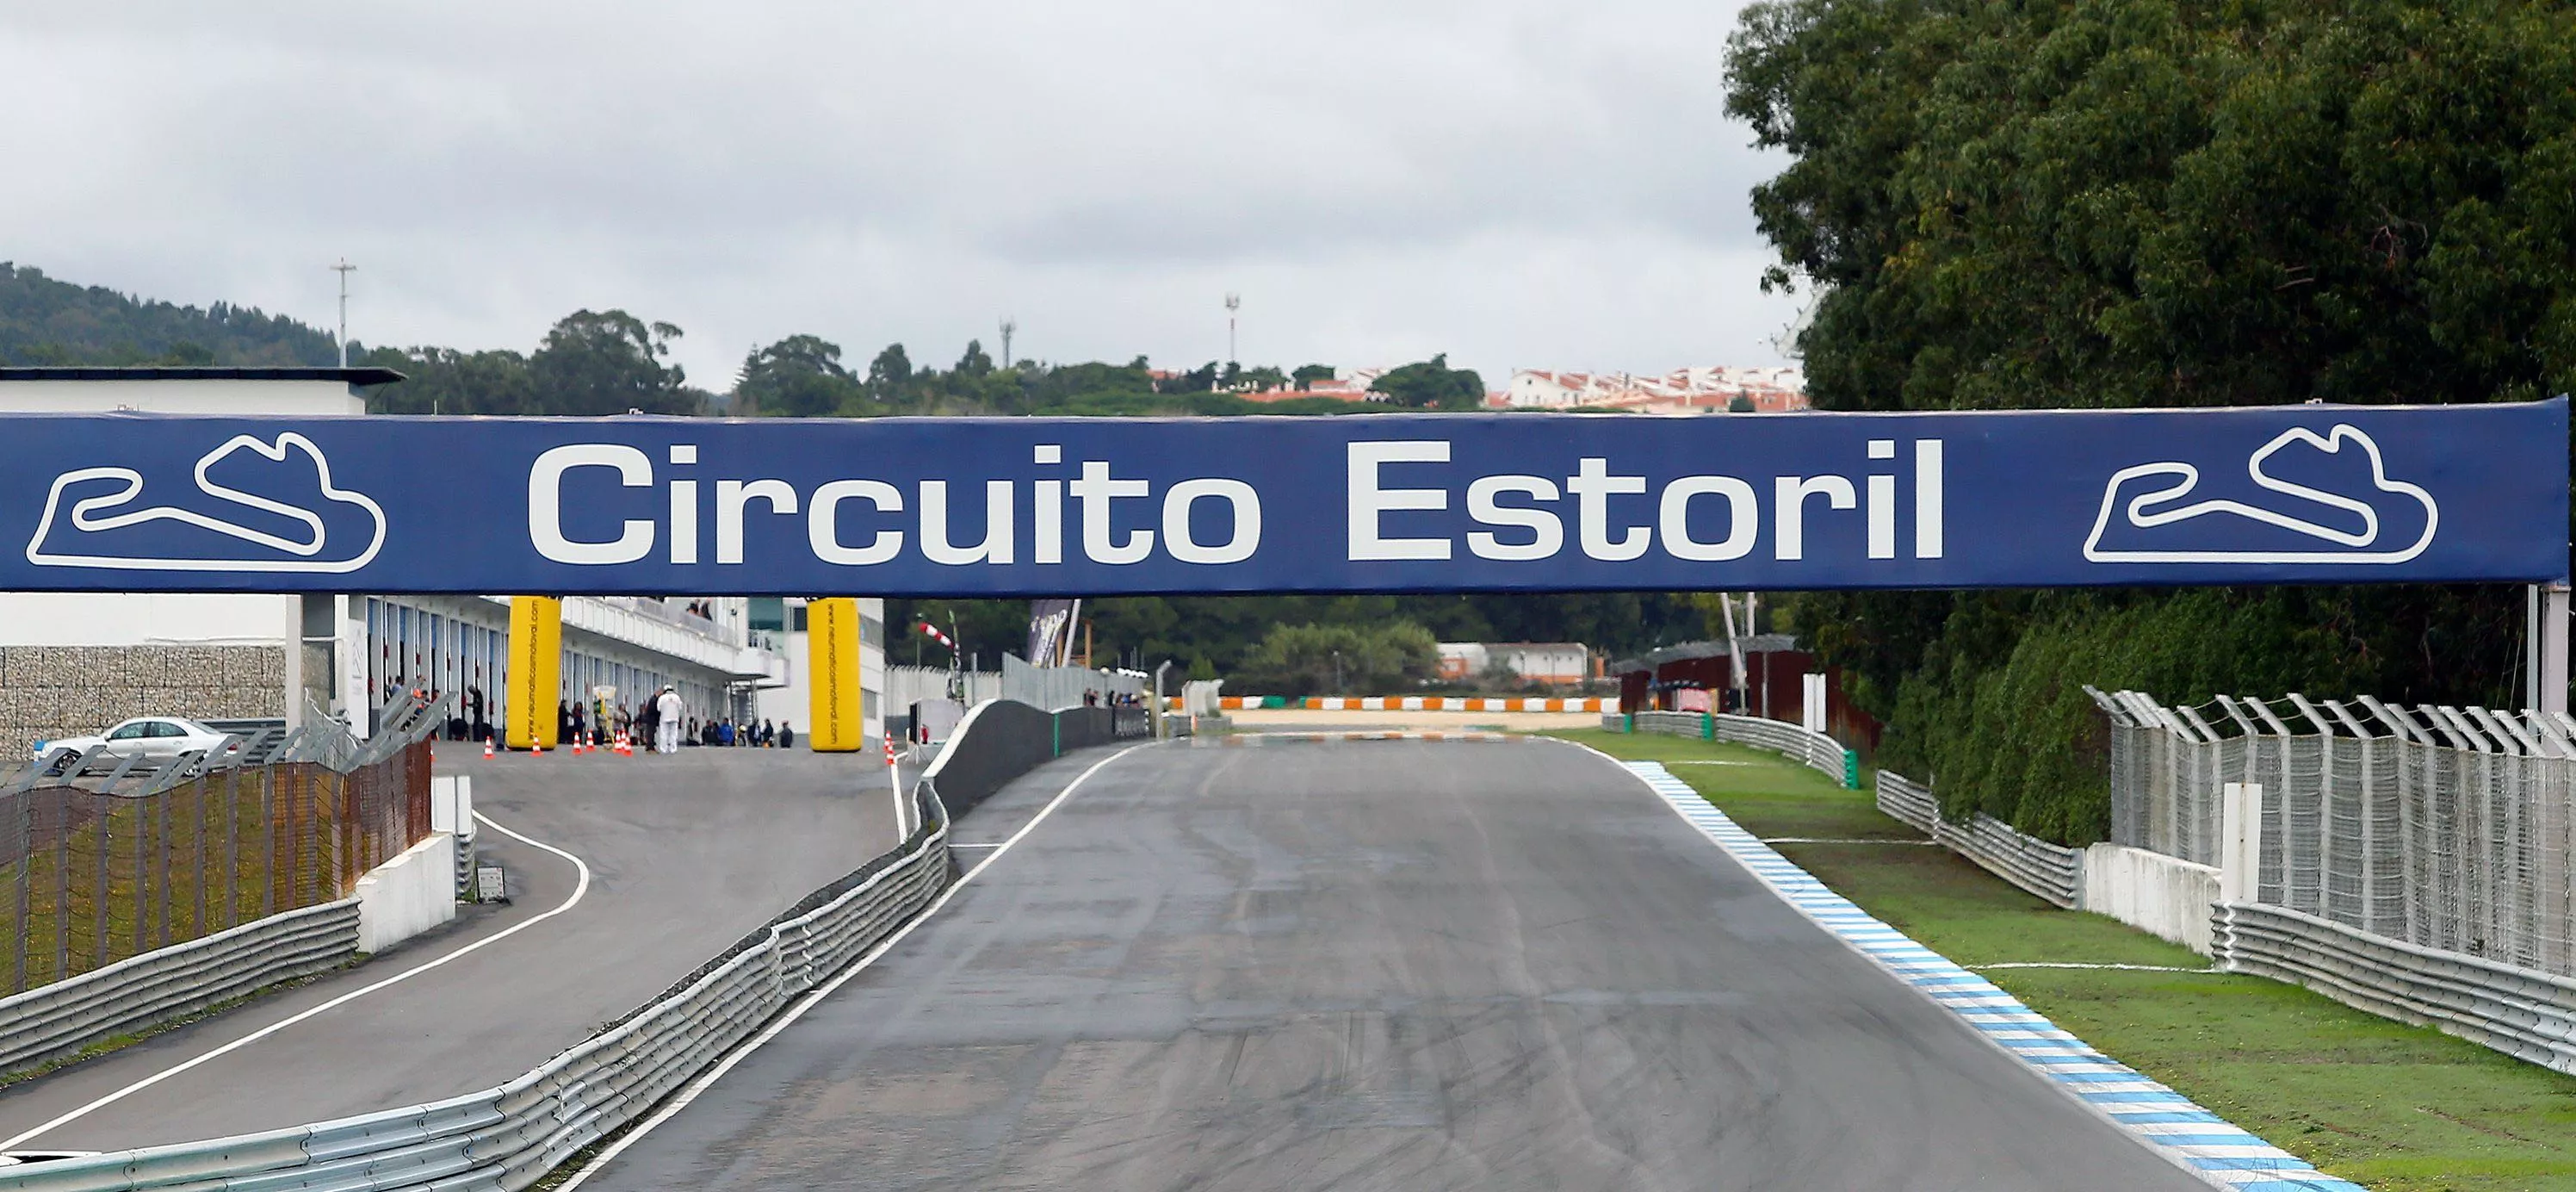 Estoril Circuit in Portugal, Europe | Racing,Motorcycles - Rated 5.4